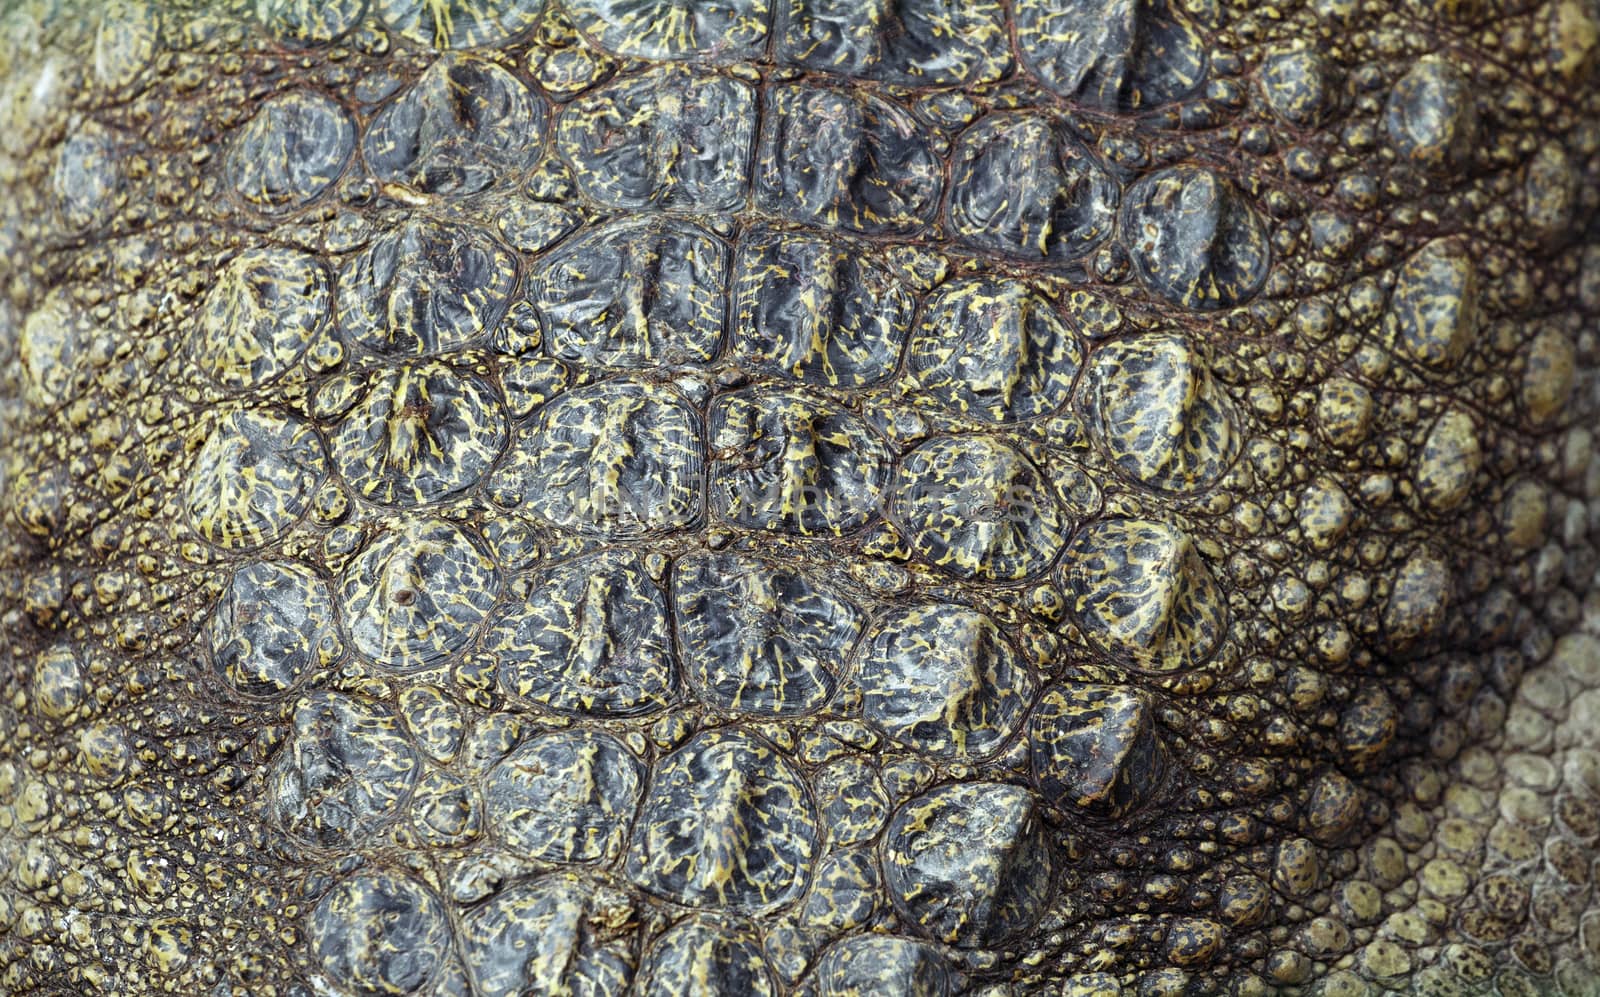 Crocodile skin, close-up by Goodday